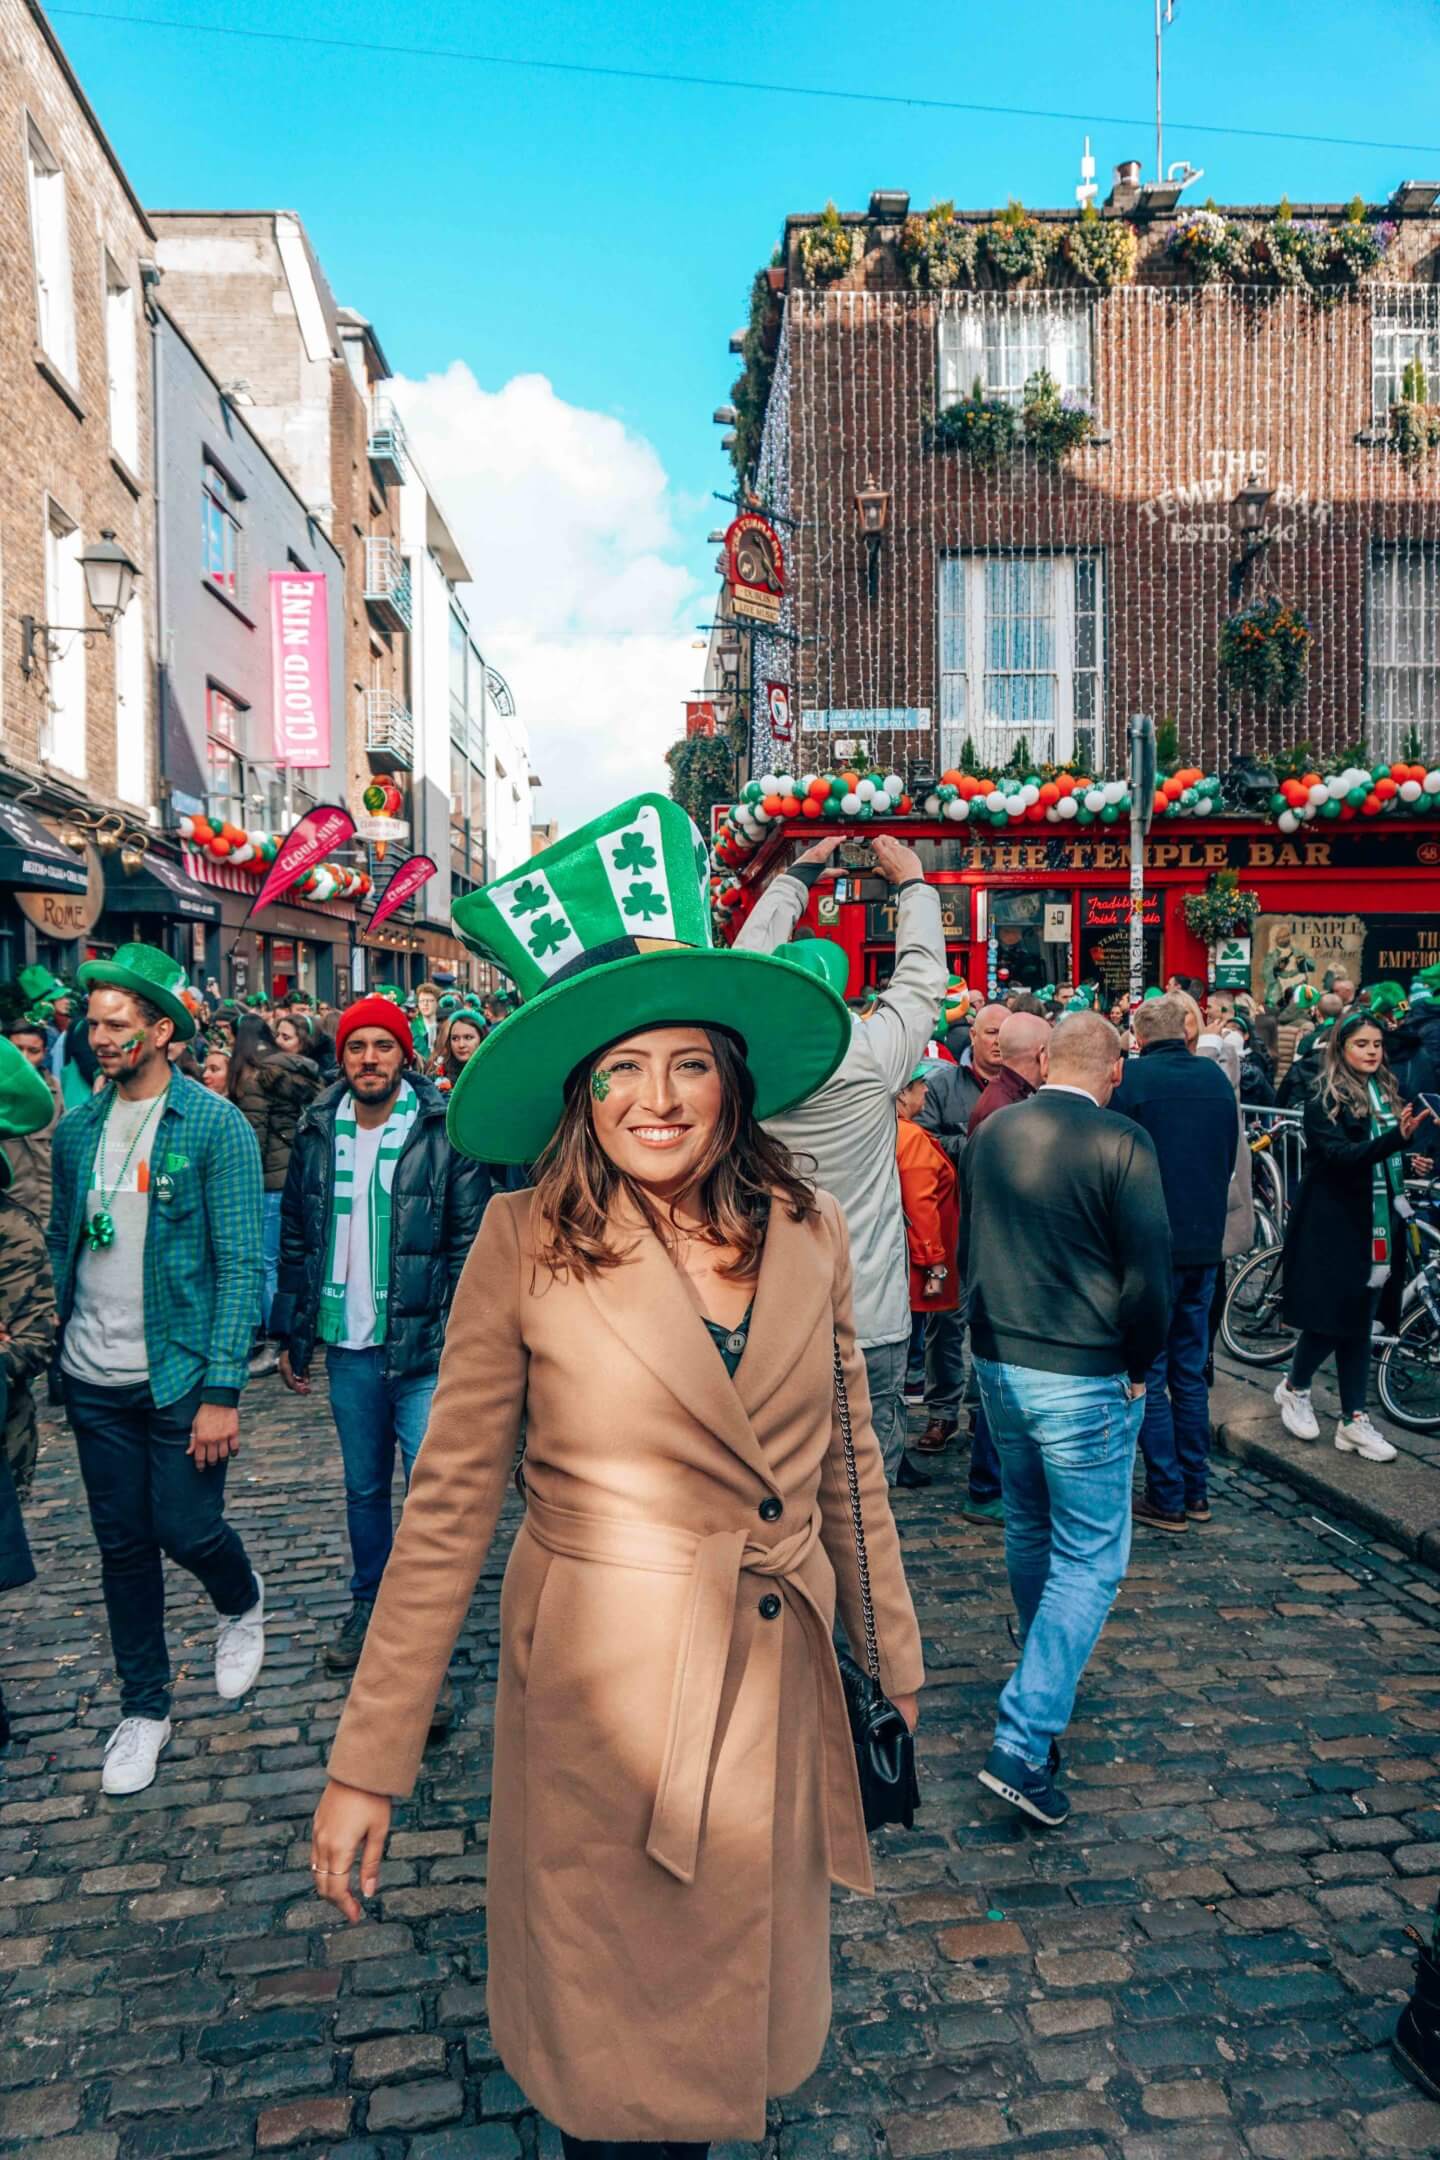 Girl wearing a green hat celebrating St Patrick's Day in Dublin